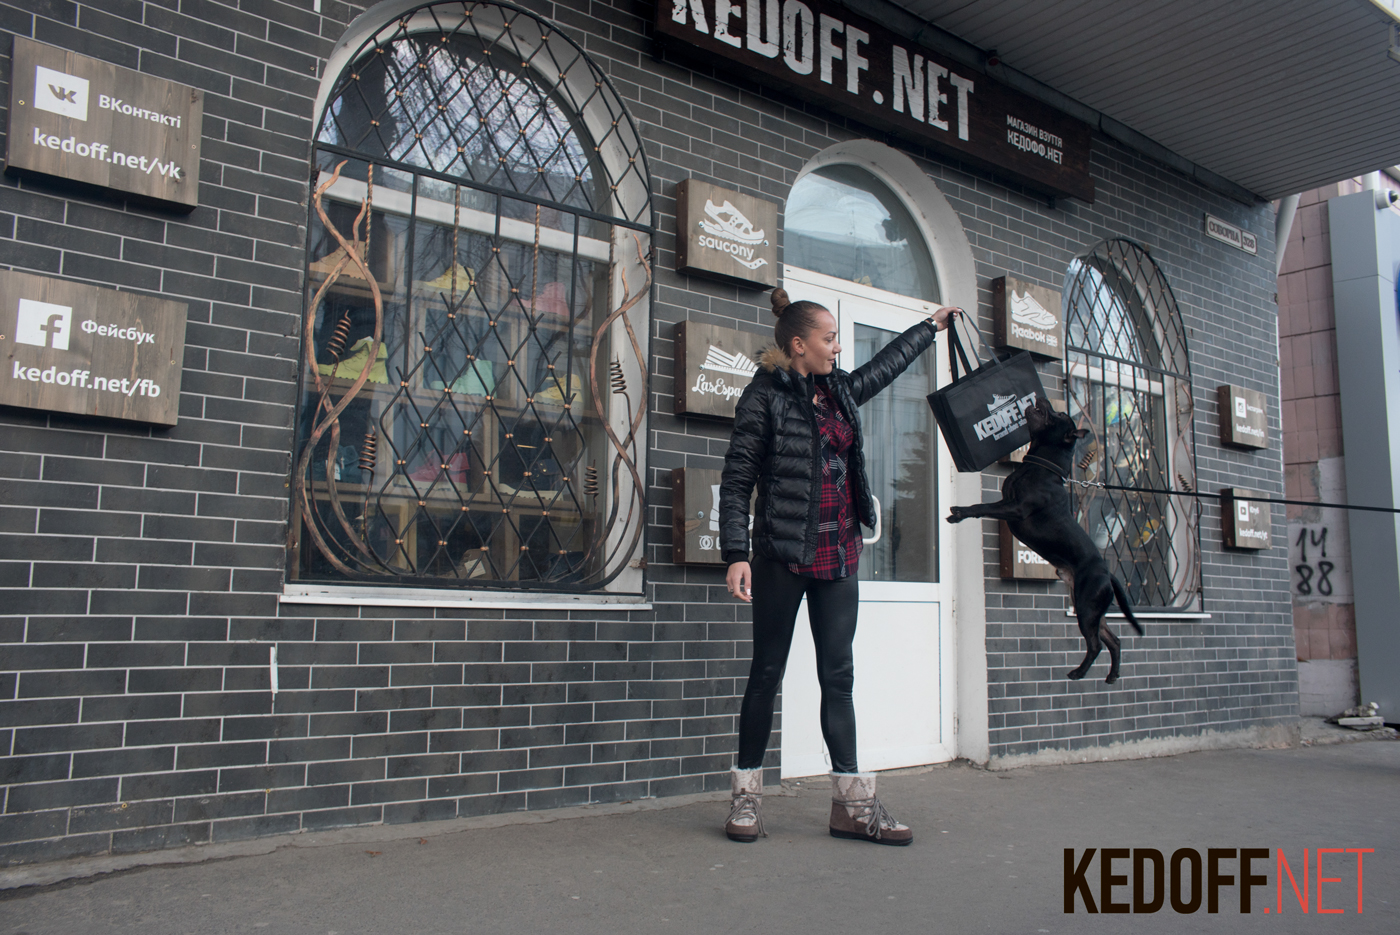 online shoes shop Kedoff.net